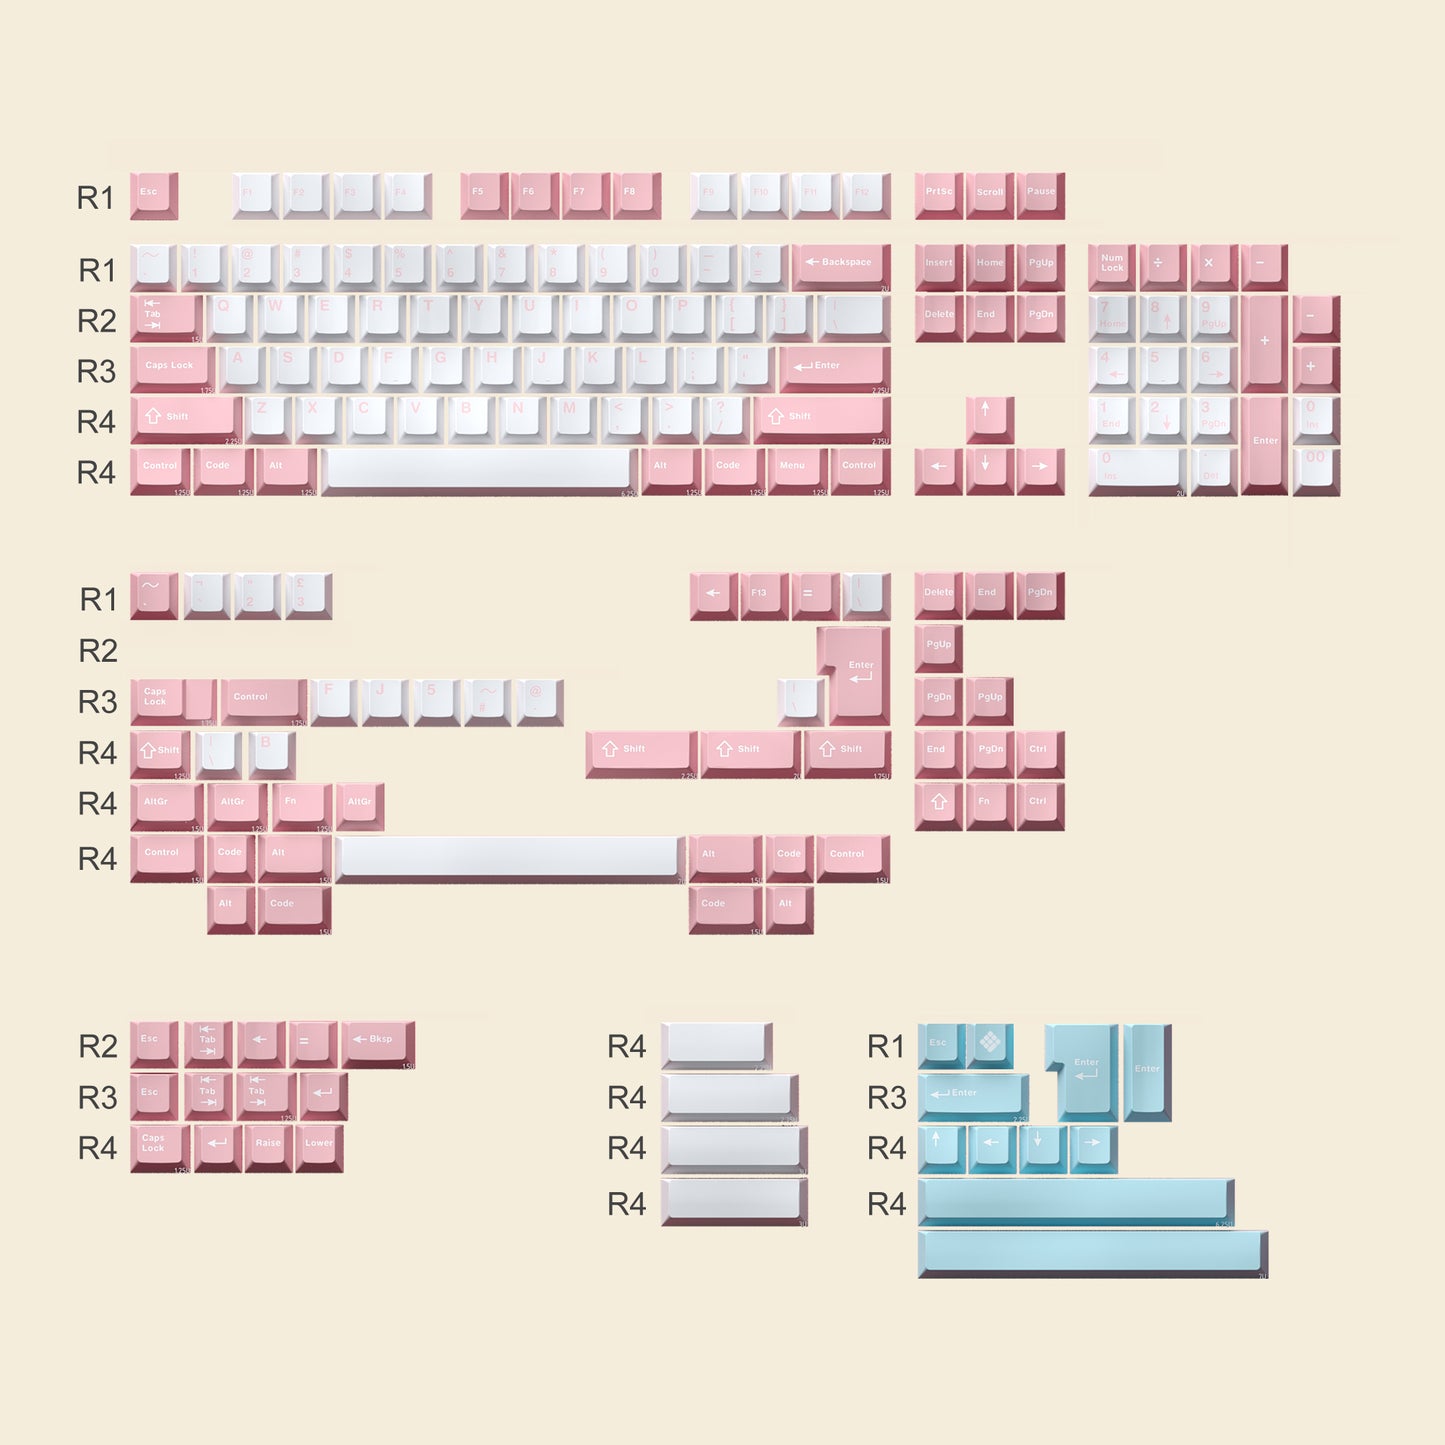 Baby Pink Cherry Profile Doubleshot Keycap Set